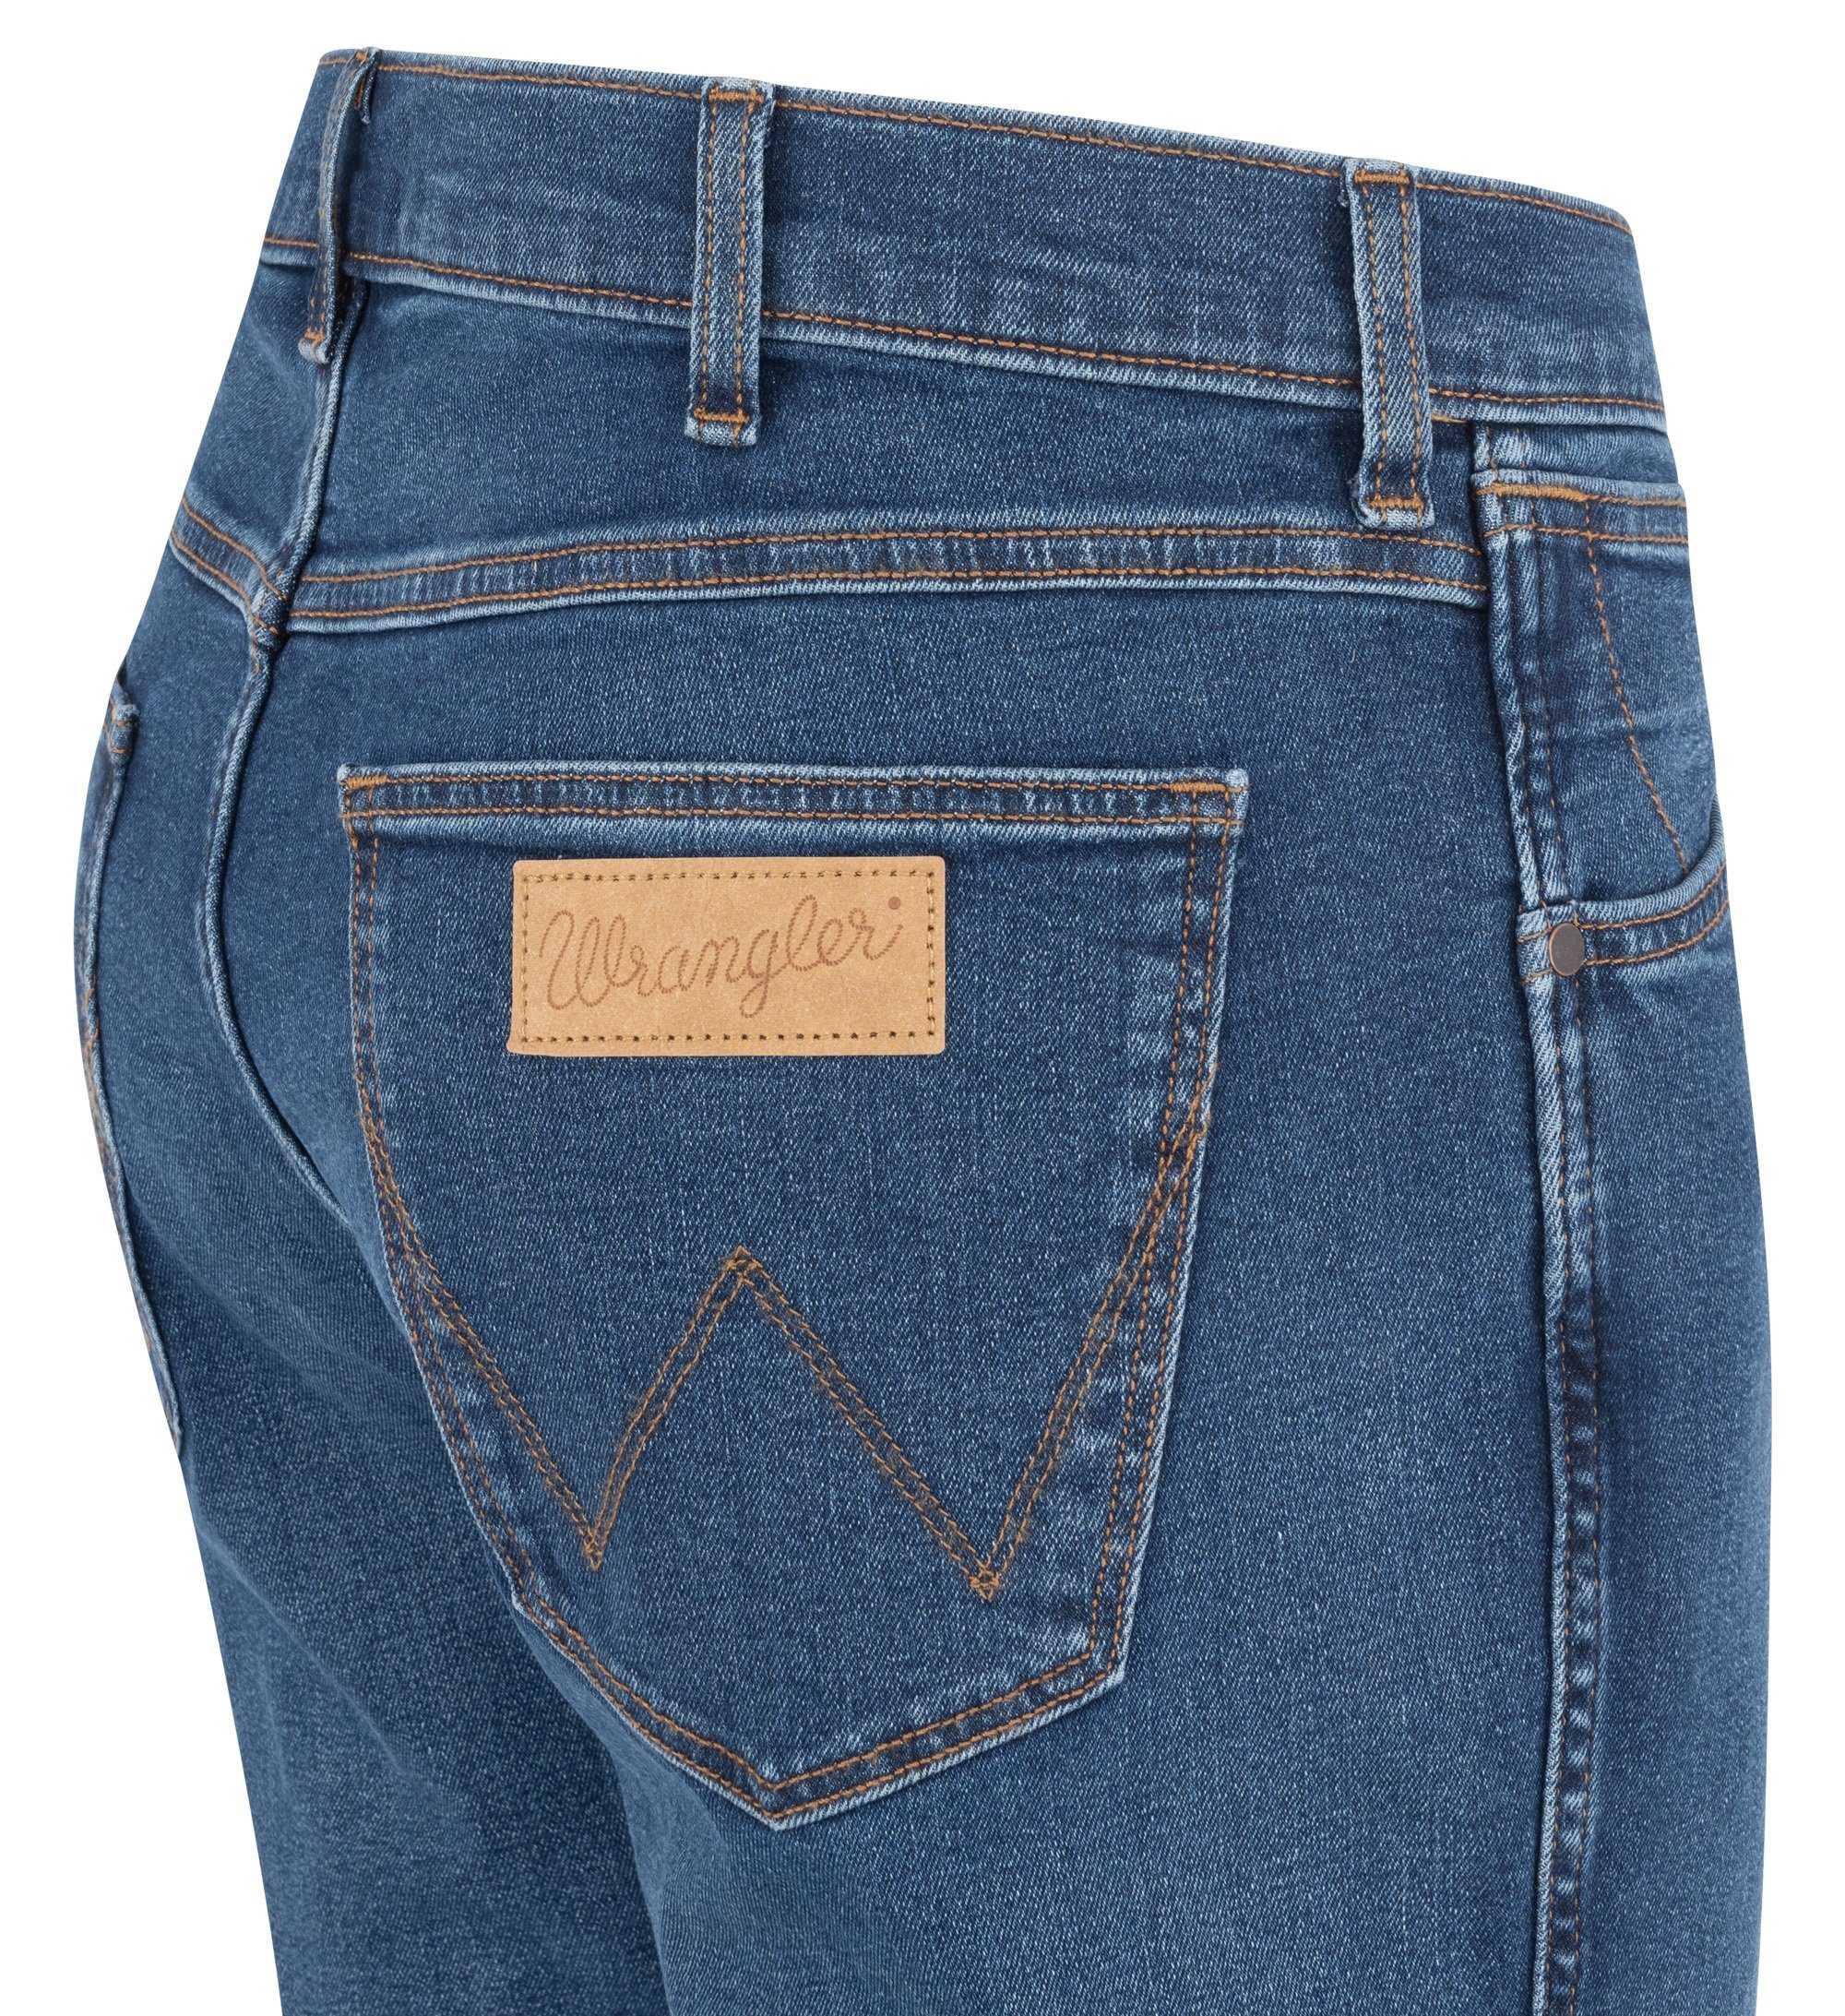 WRANGLER W15QOAR21 far GREENSBORO Wrangler gone 5-Pocket-Jeans